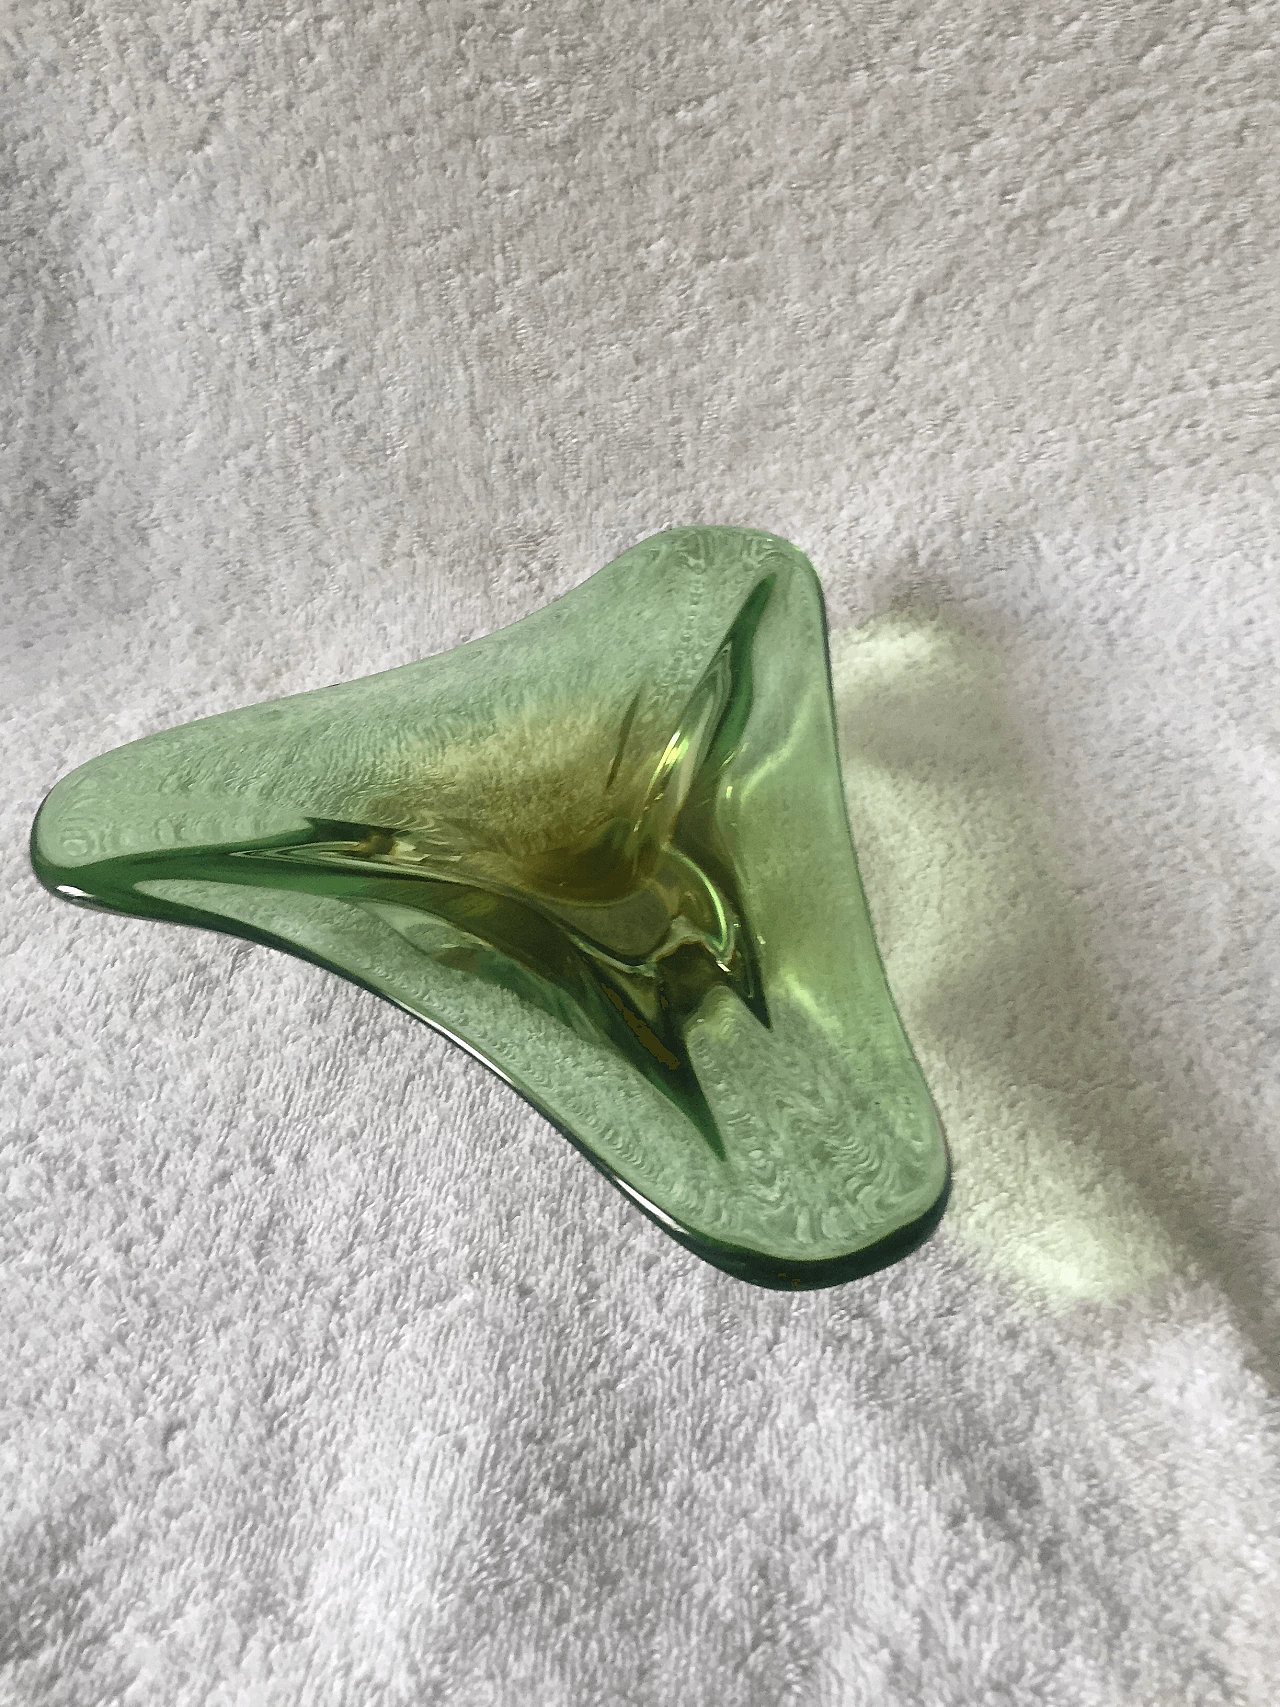 Seguso green Murano glass ashtray, 1970s 1367376